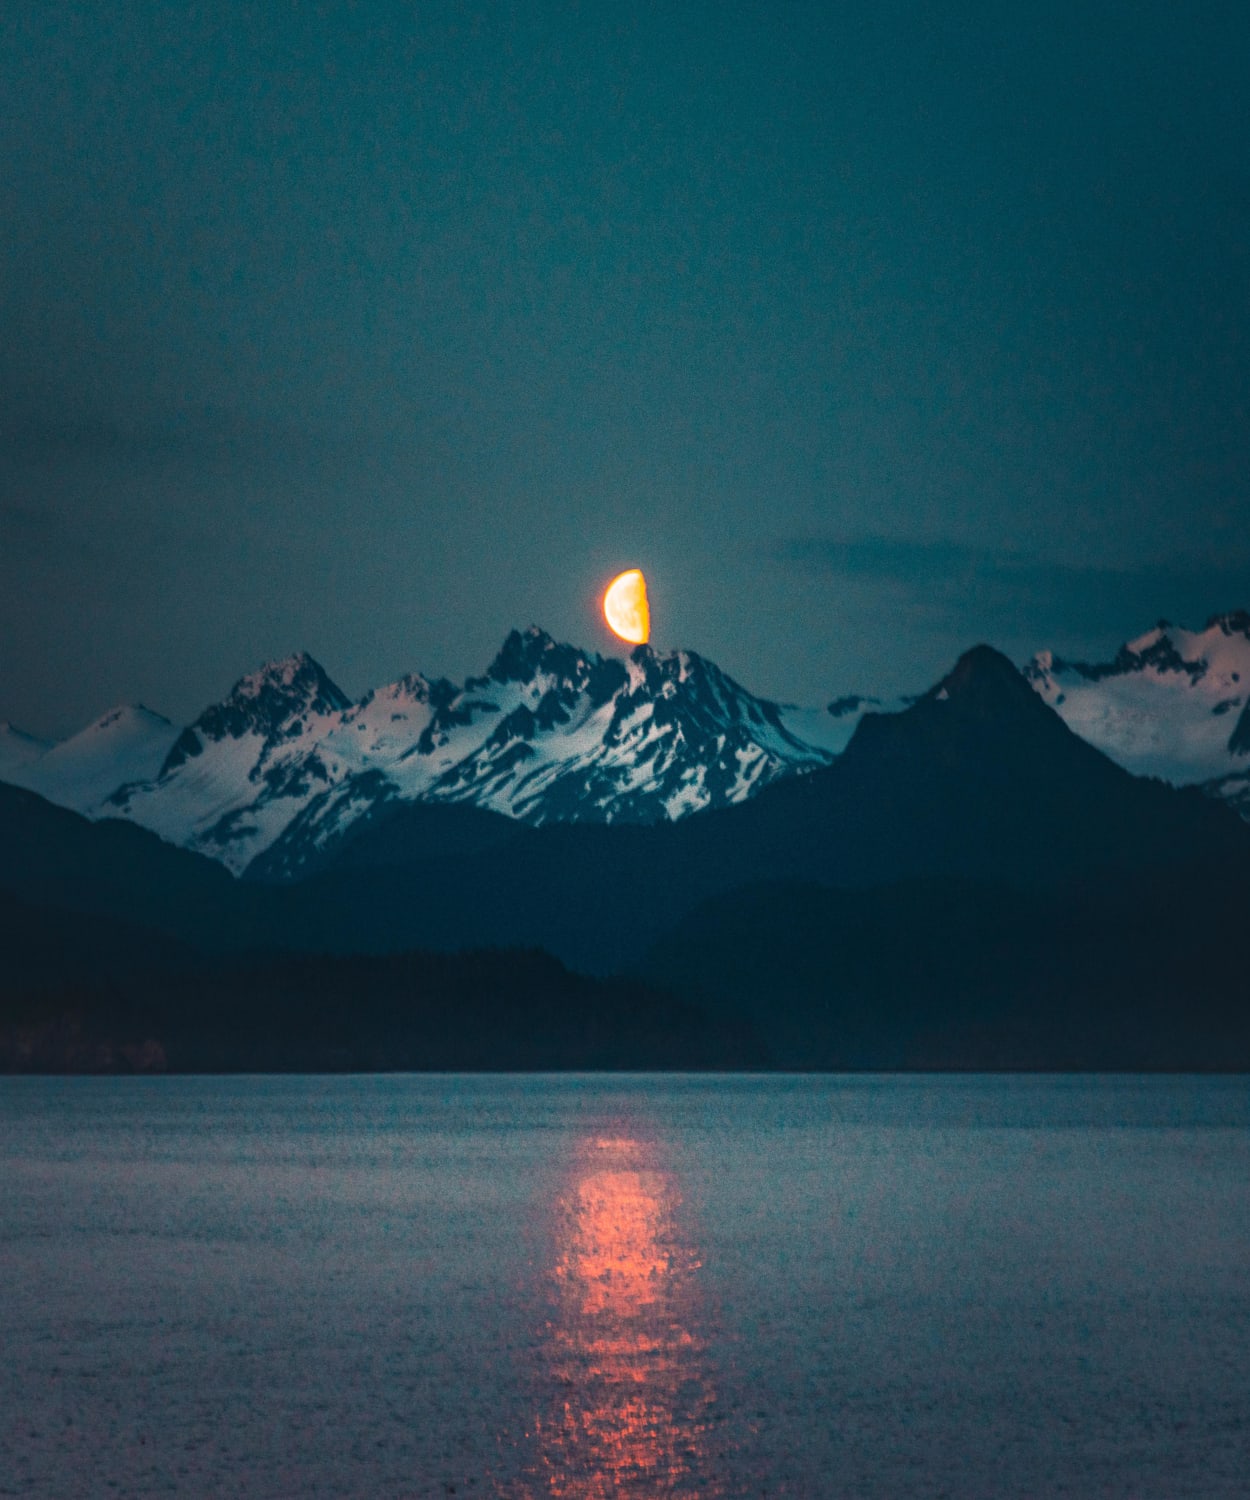 Moonrise in Homer, Alaska.